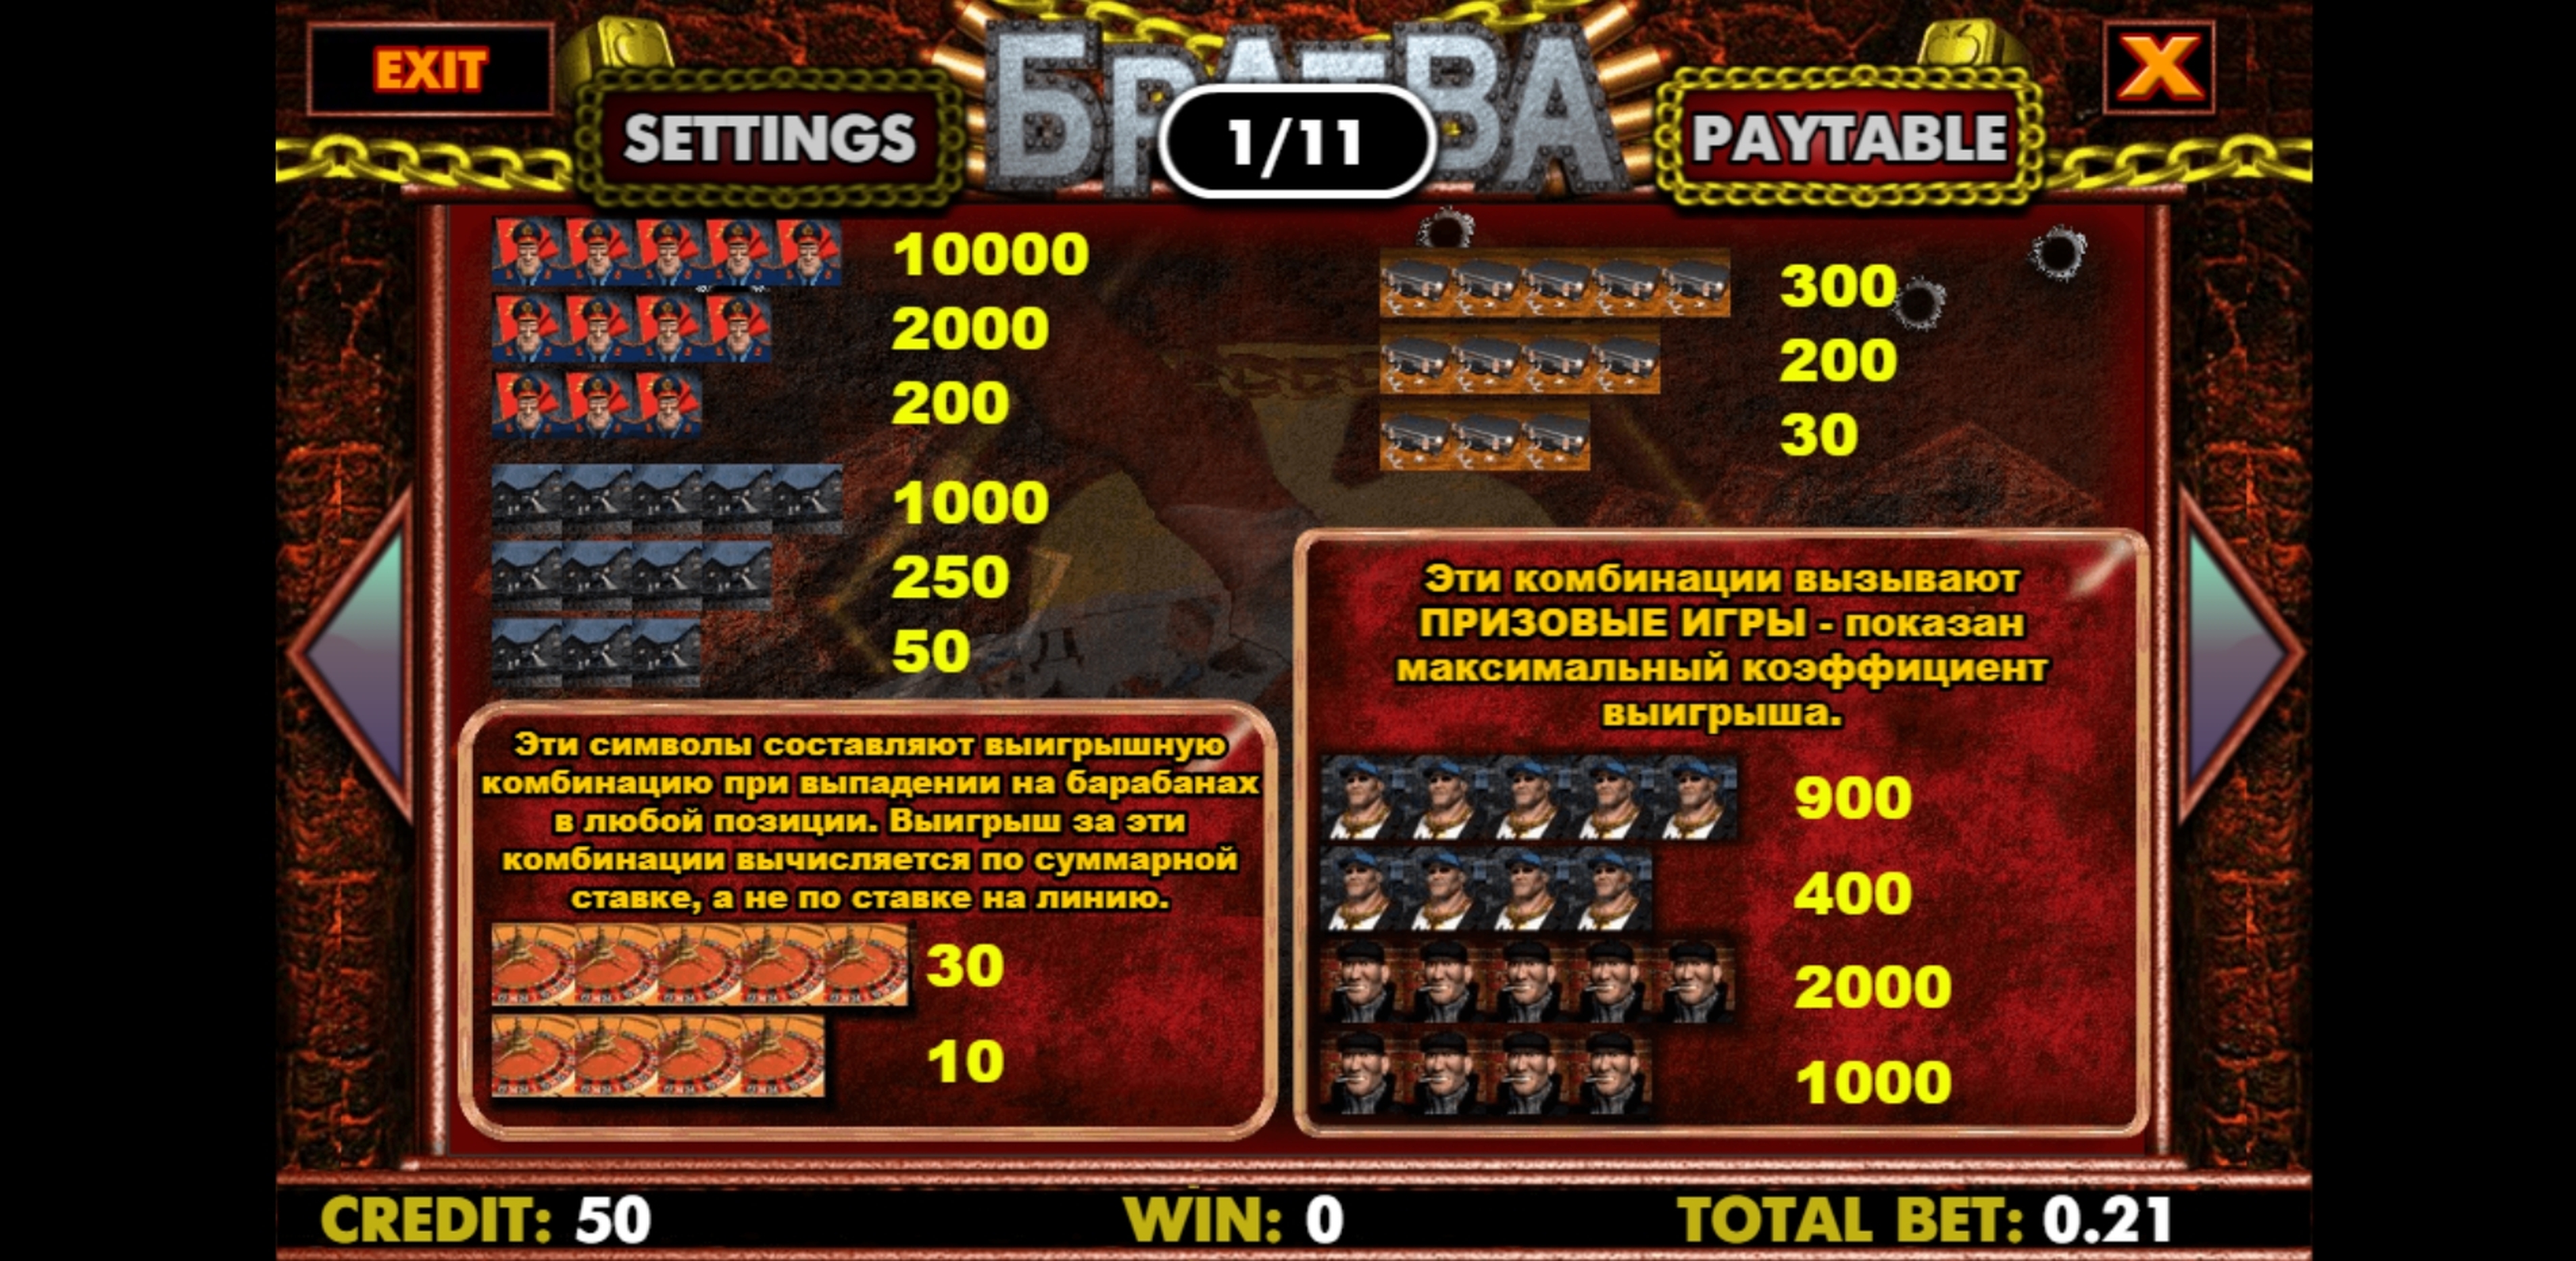 Info of Bratva Slot Game by Unicum